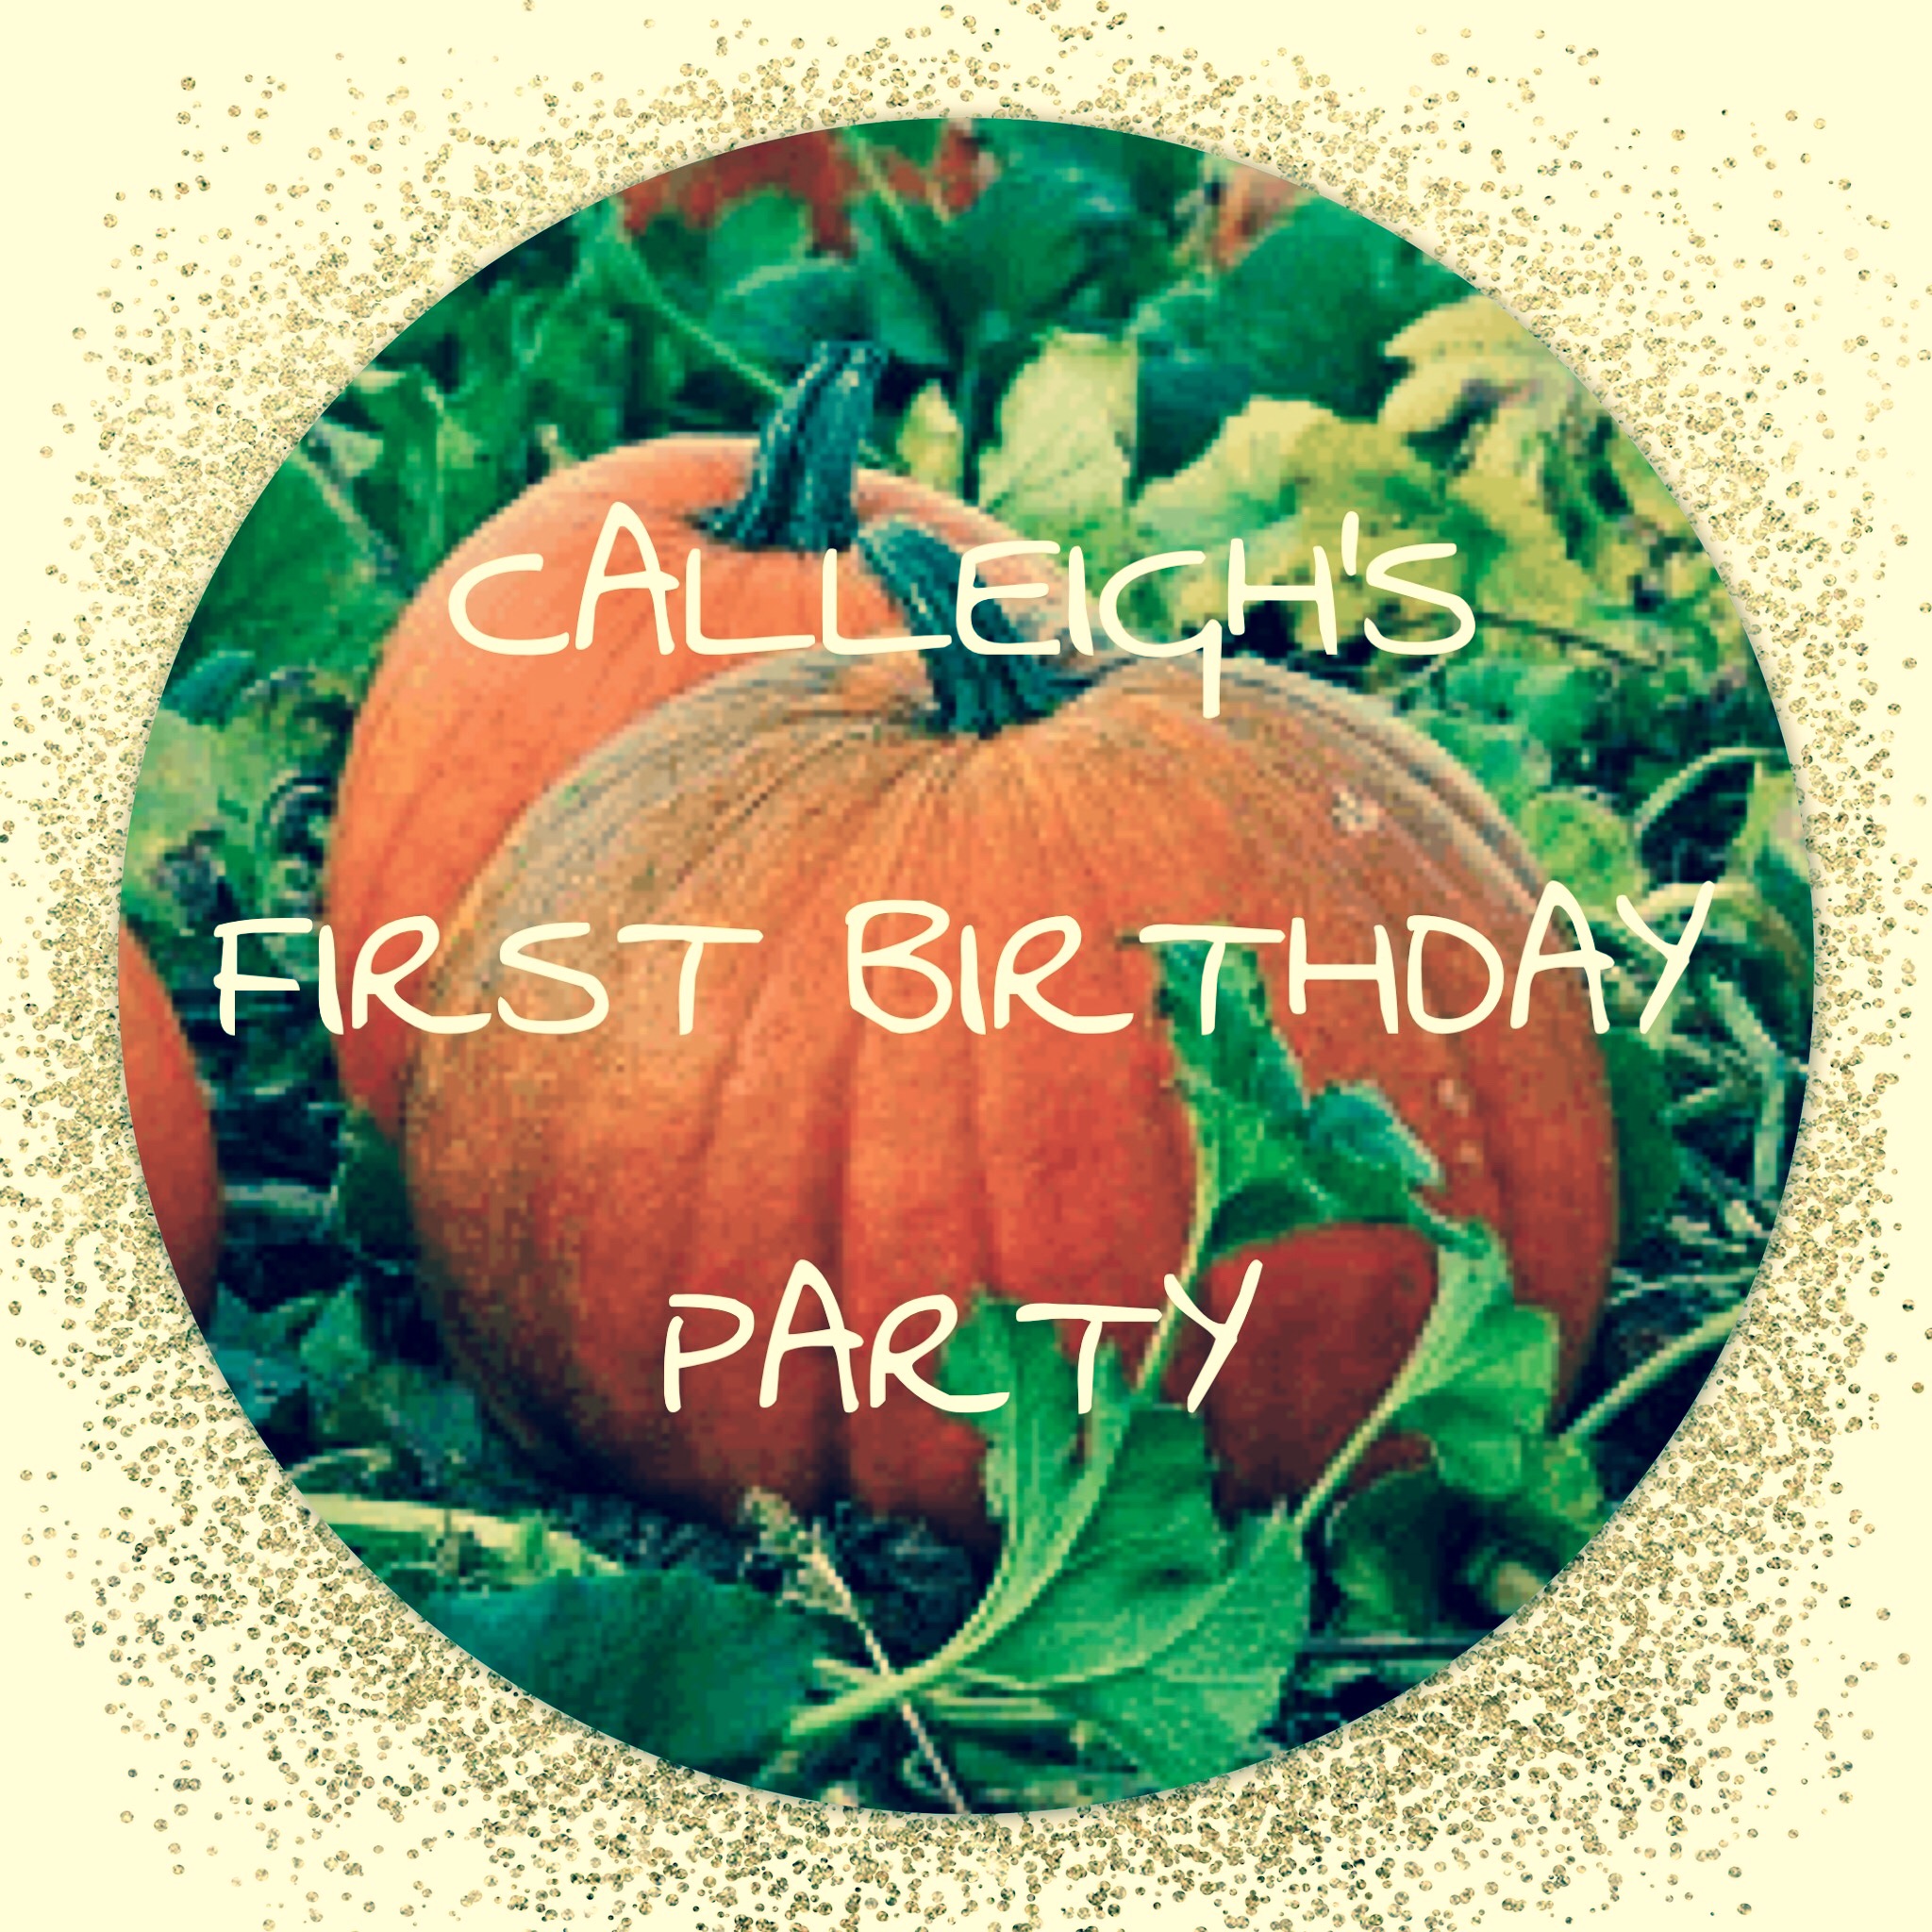 Calleigh's First Birthday